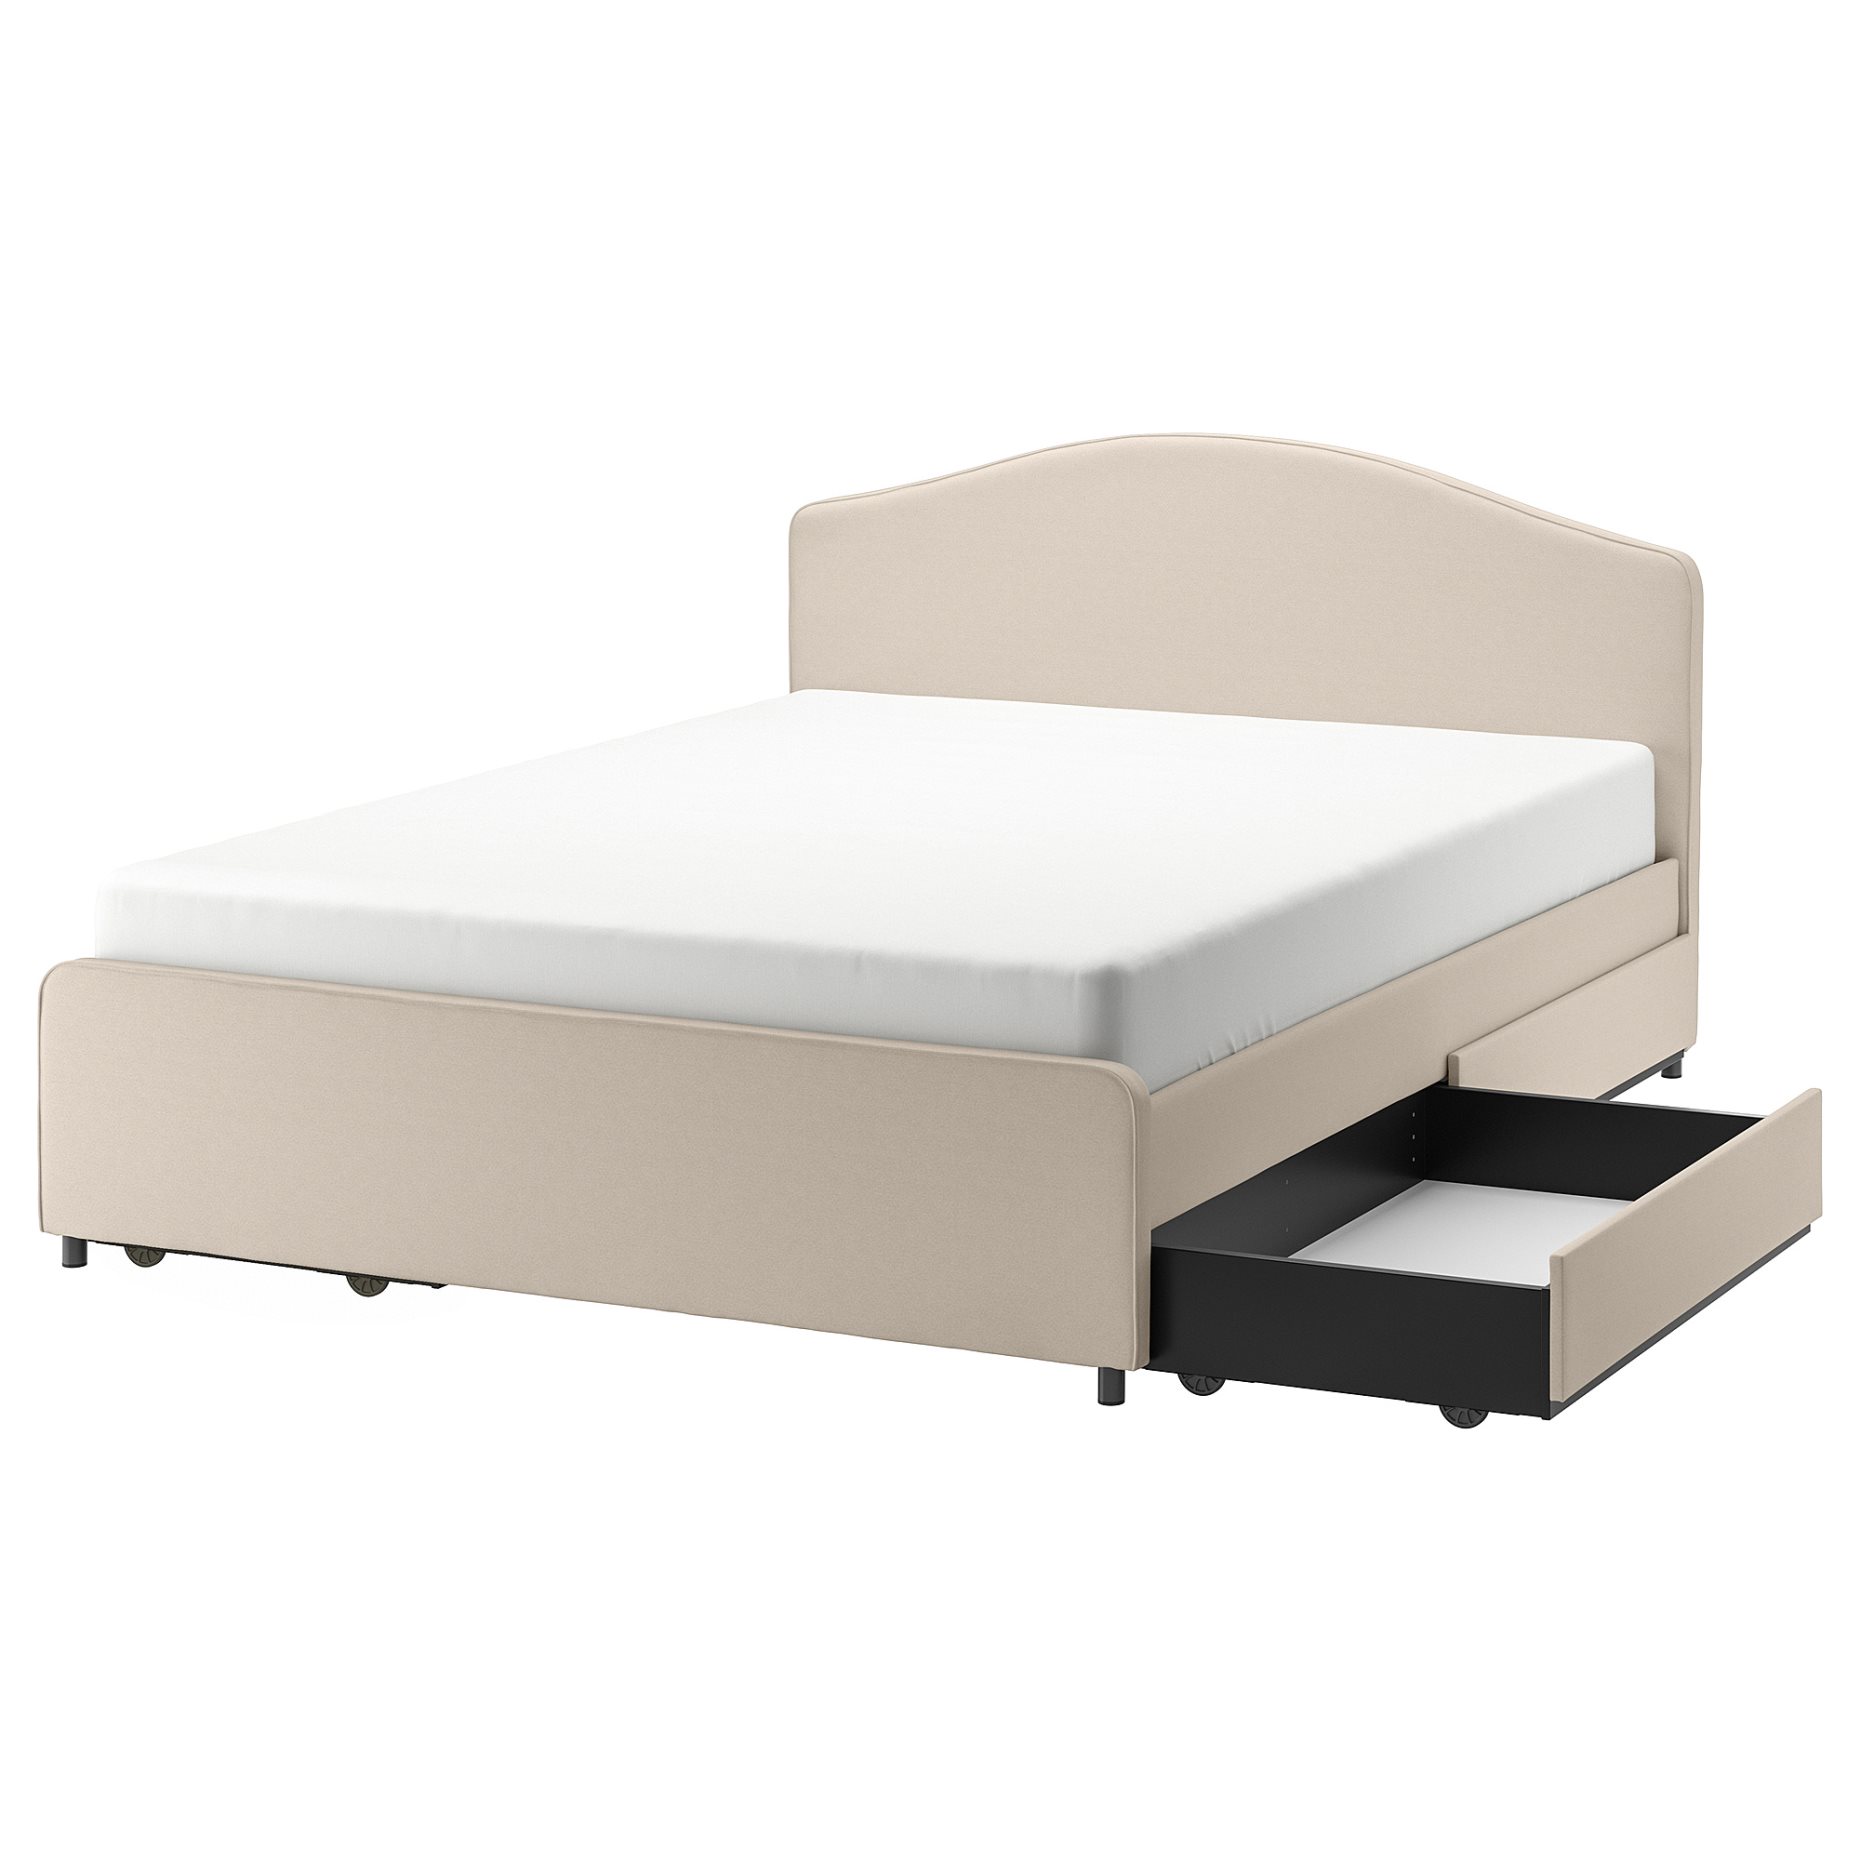 HAUGA, κρεβάτι με επένδυση/4 αποθηκευτικά κουτιά, 140X200 cm, 993.366.16